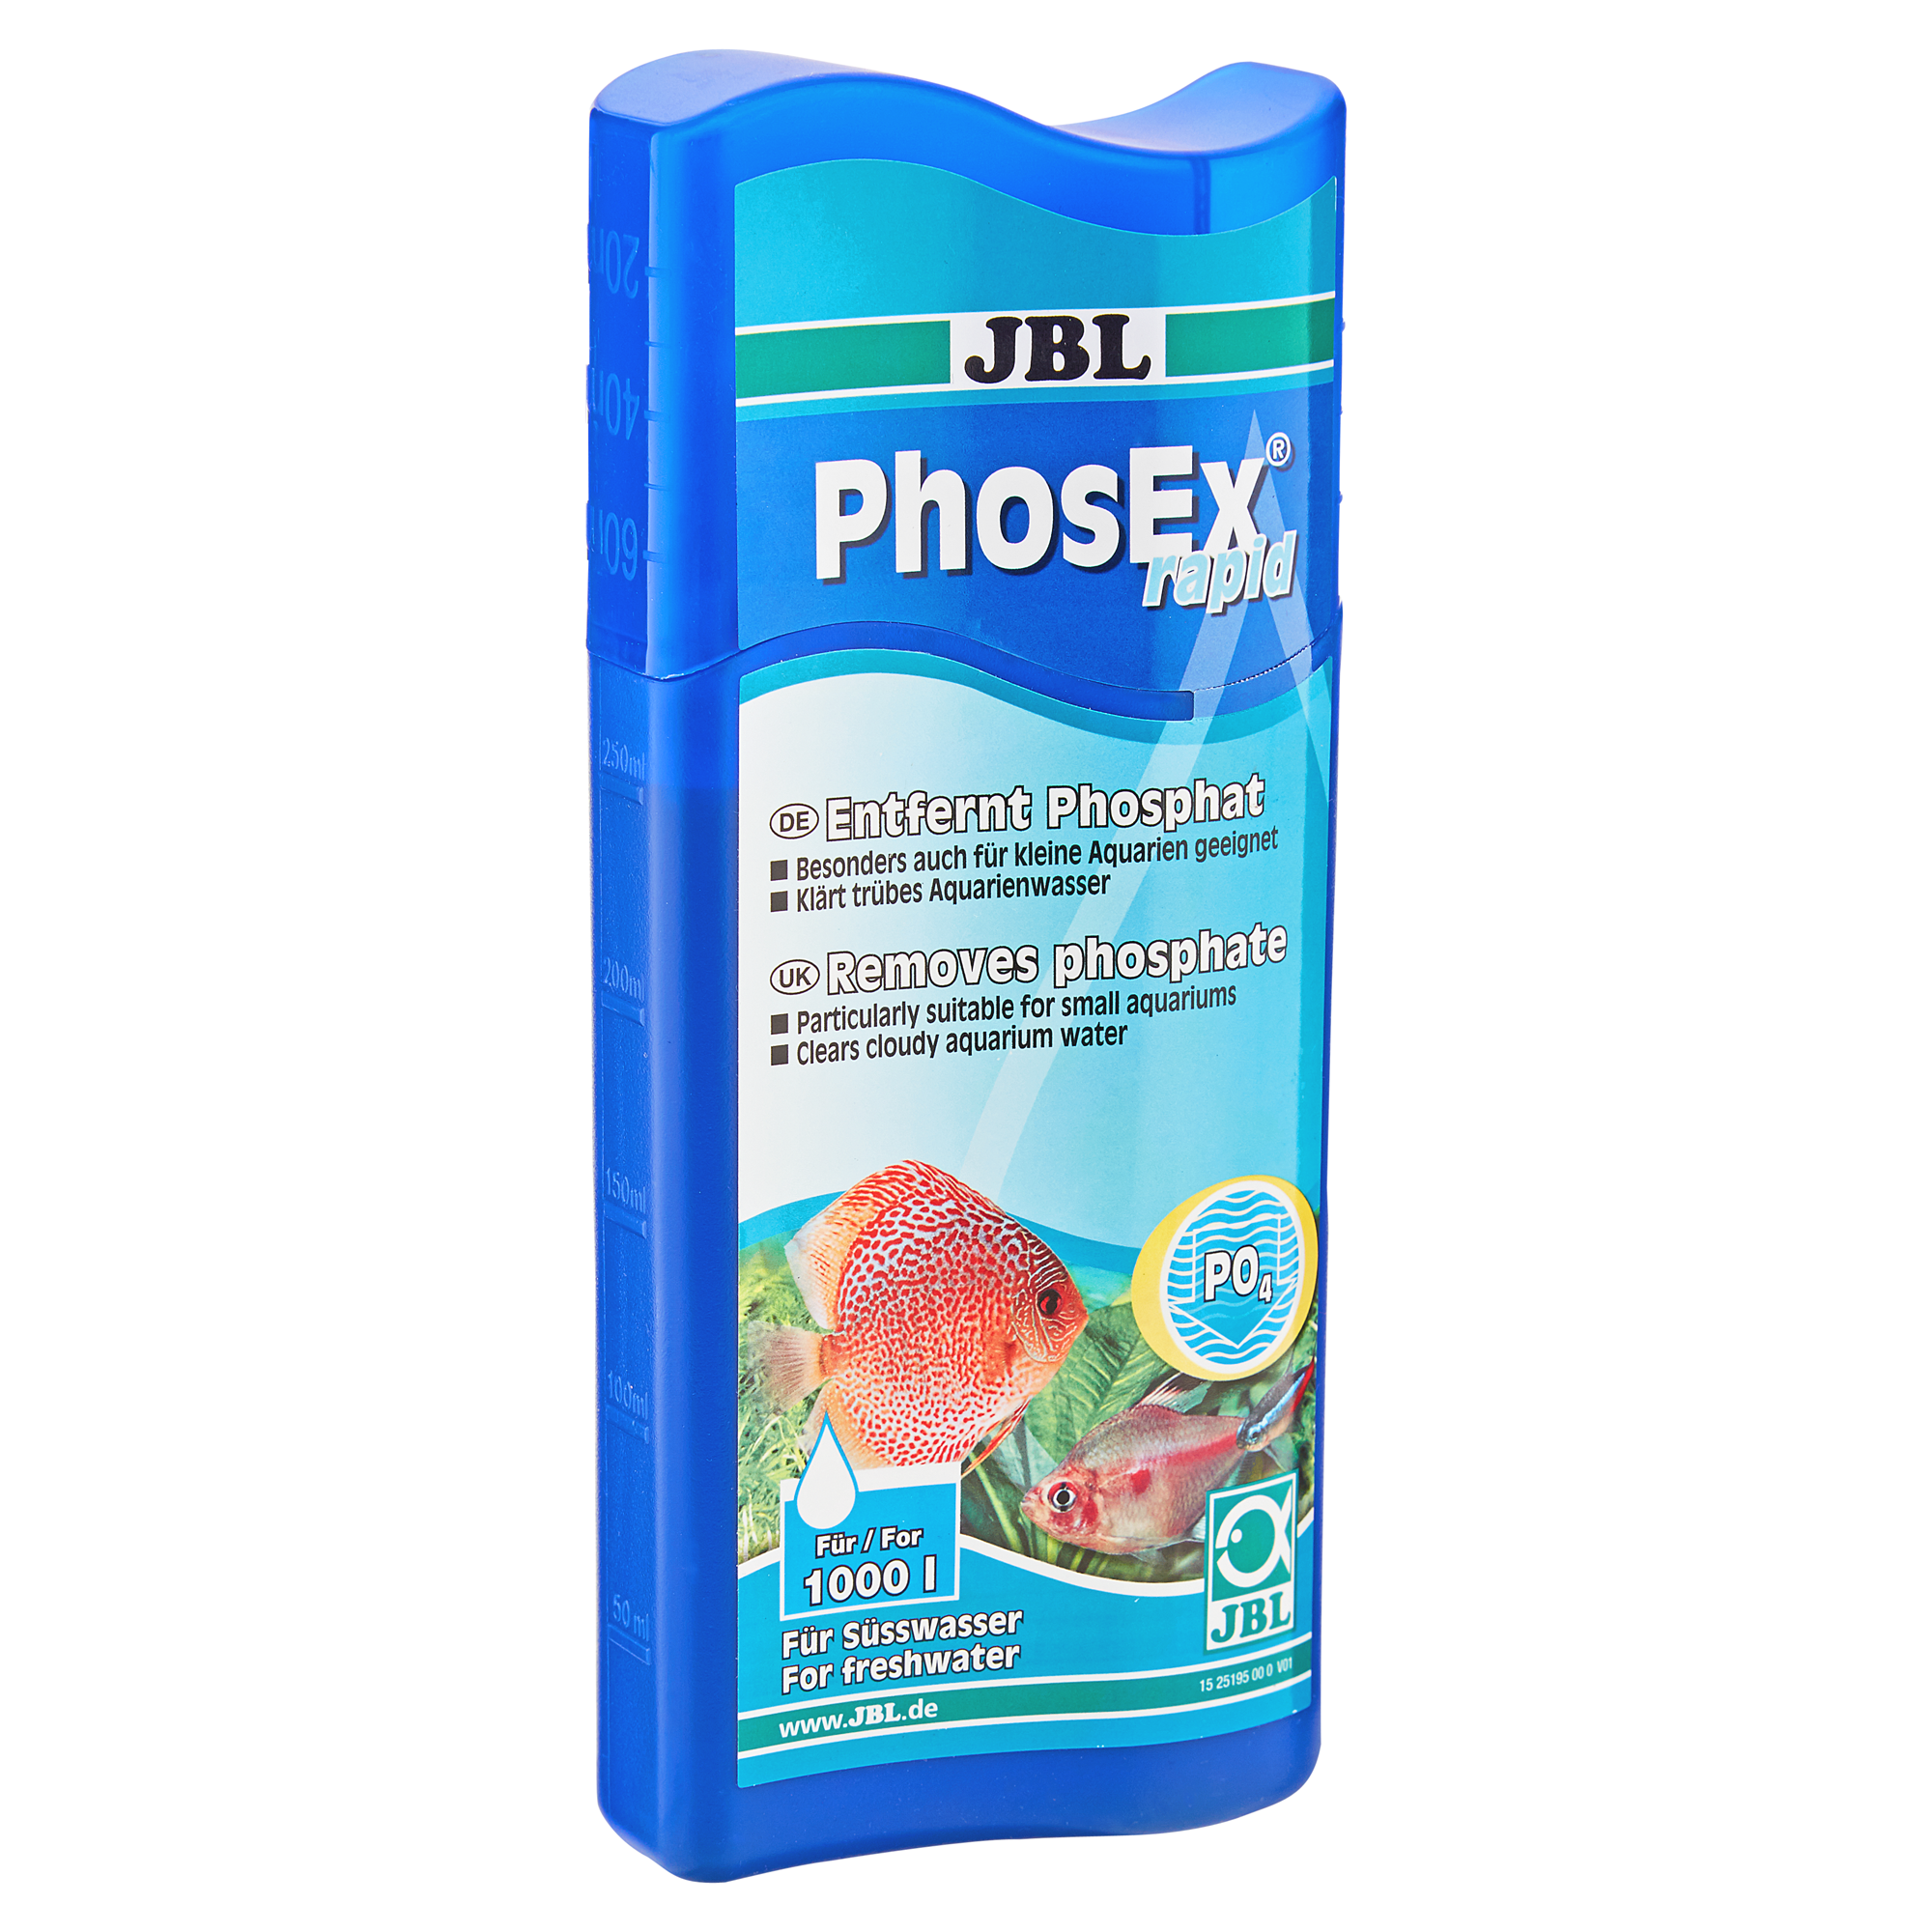 Phosphatentferner "PhosEx rapid" 250 ml + product picture